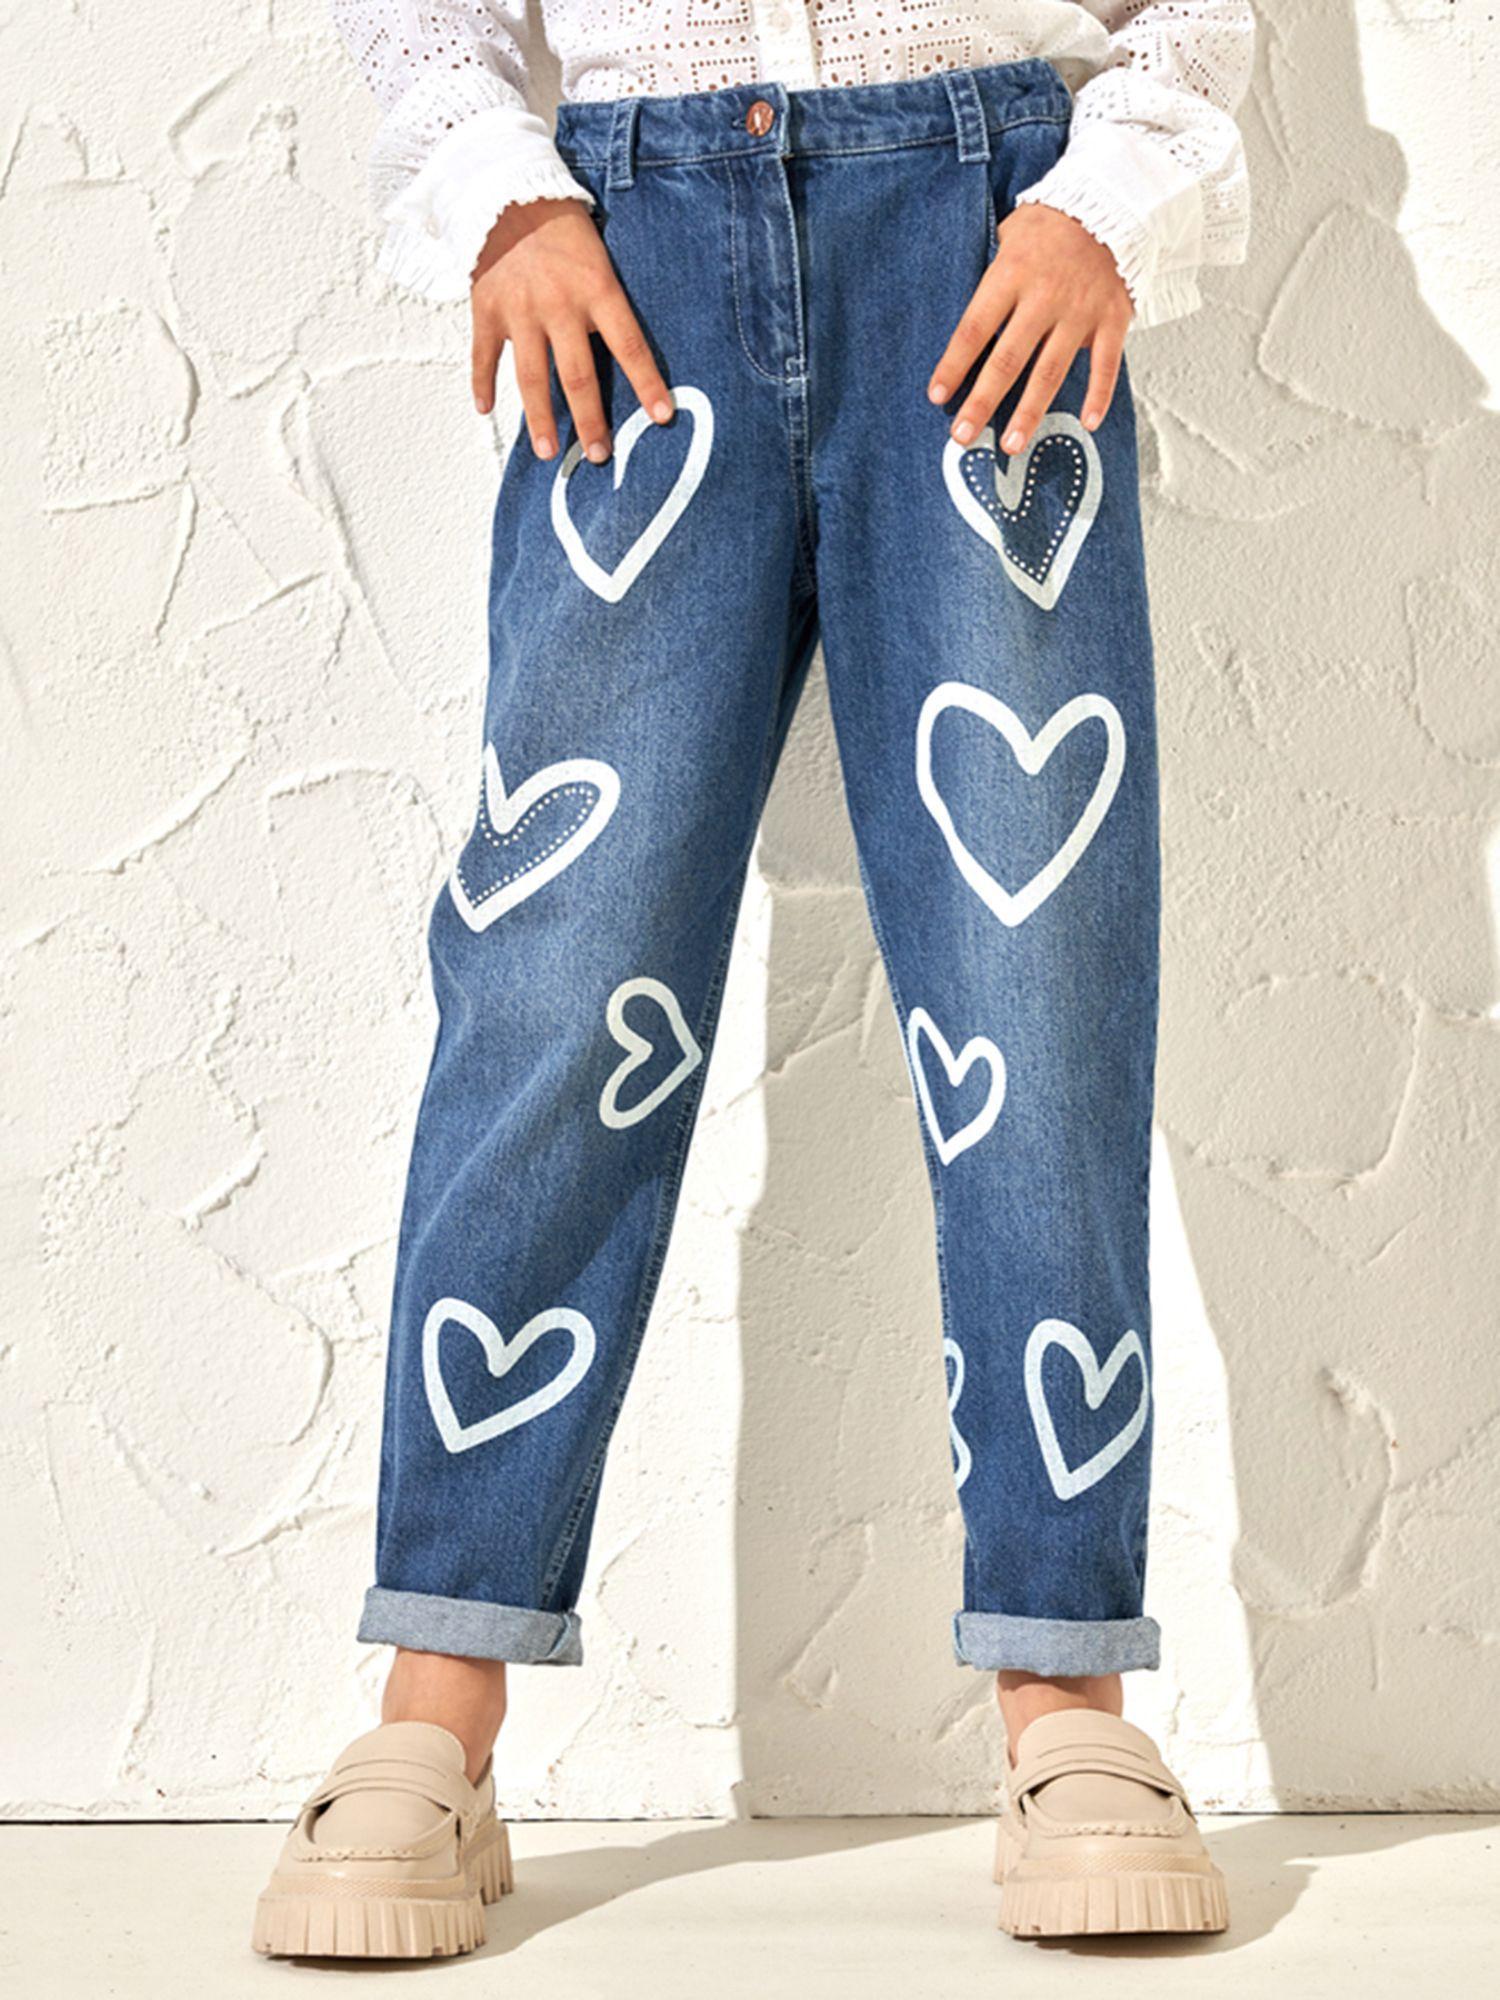 printed blue jeans